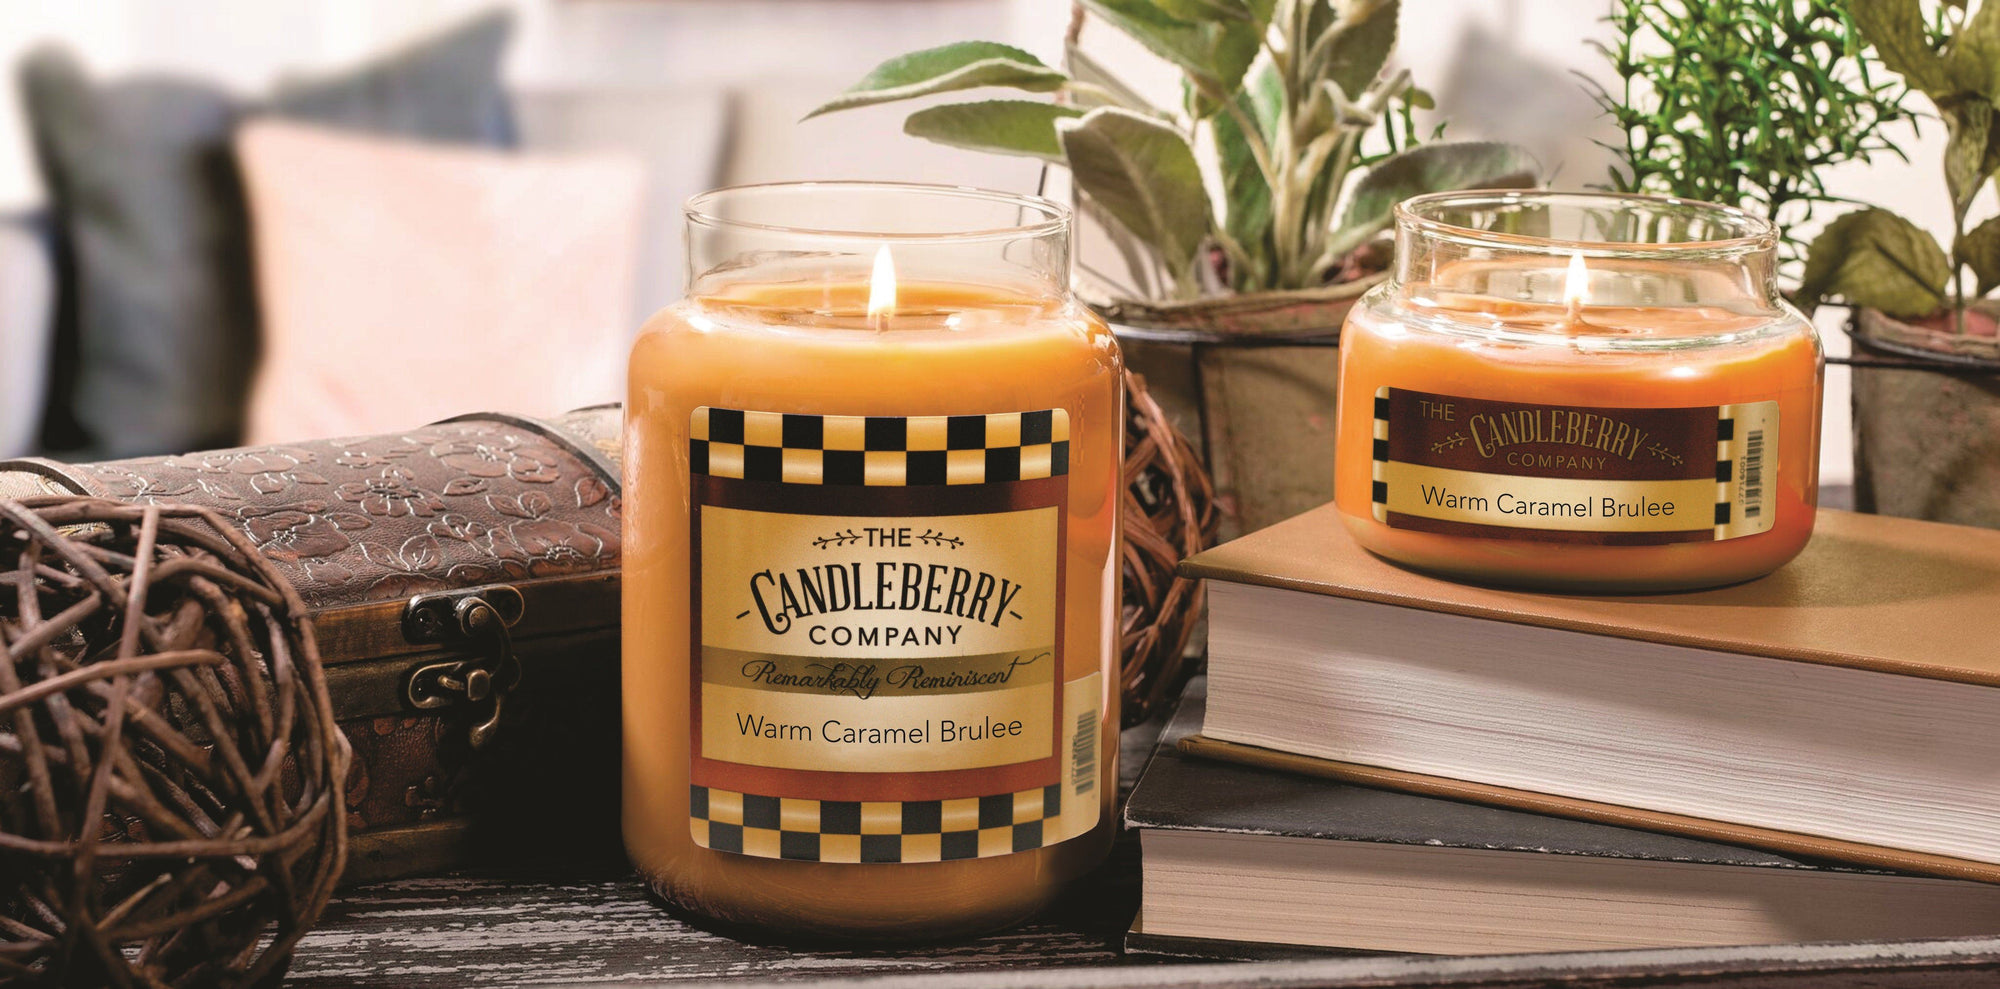 Warm Caramel Brulee™, 26 oz. Jar, Scented Candle 26 oz. Large Jar Candle The Candleberry Candle Company 